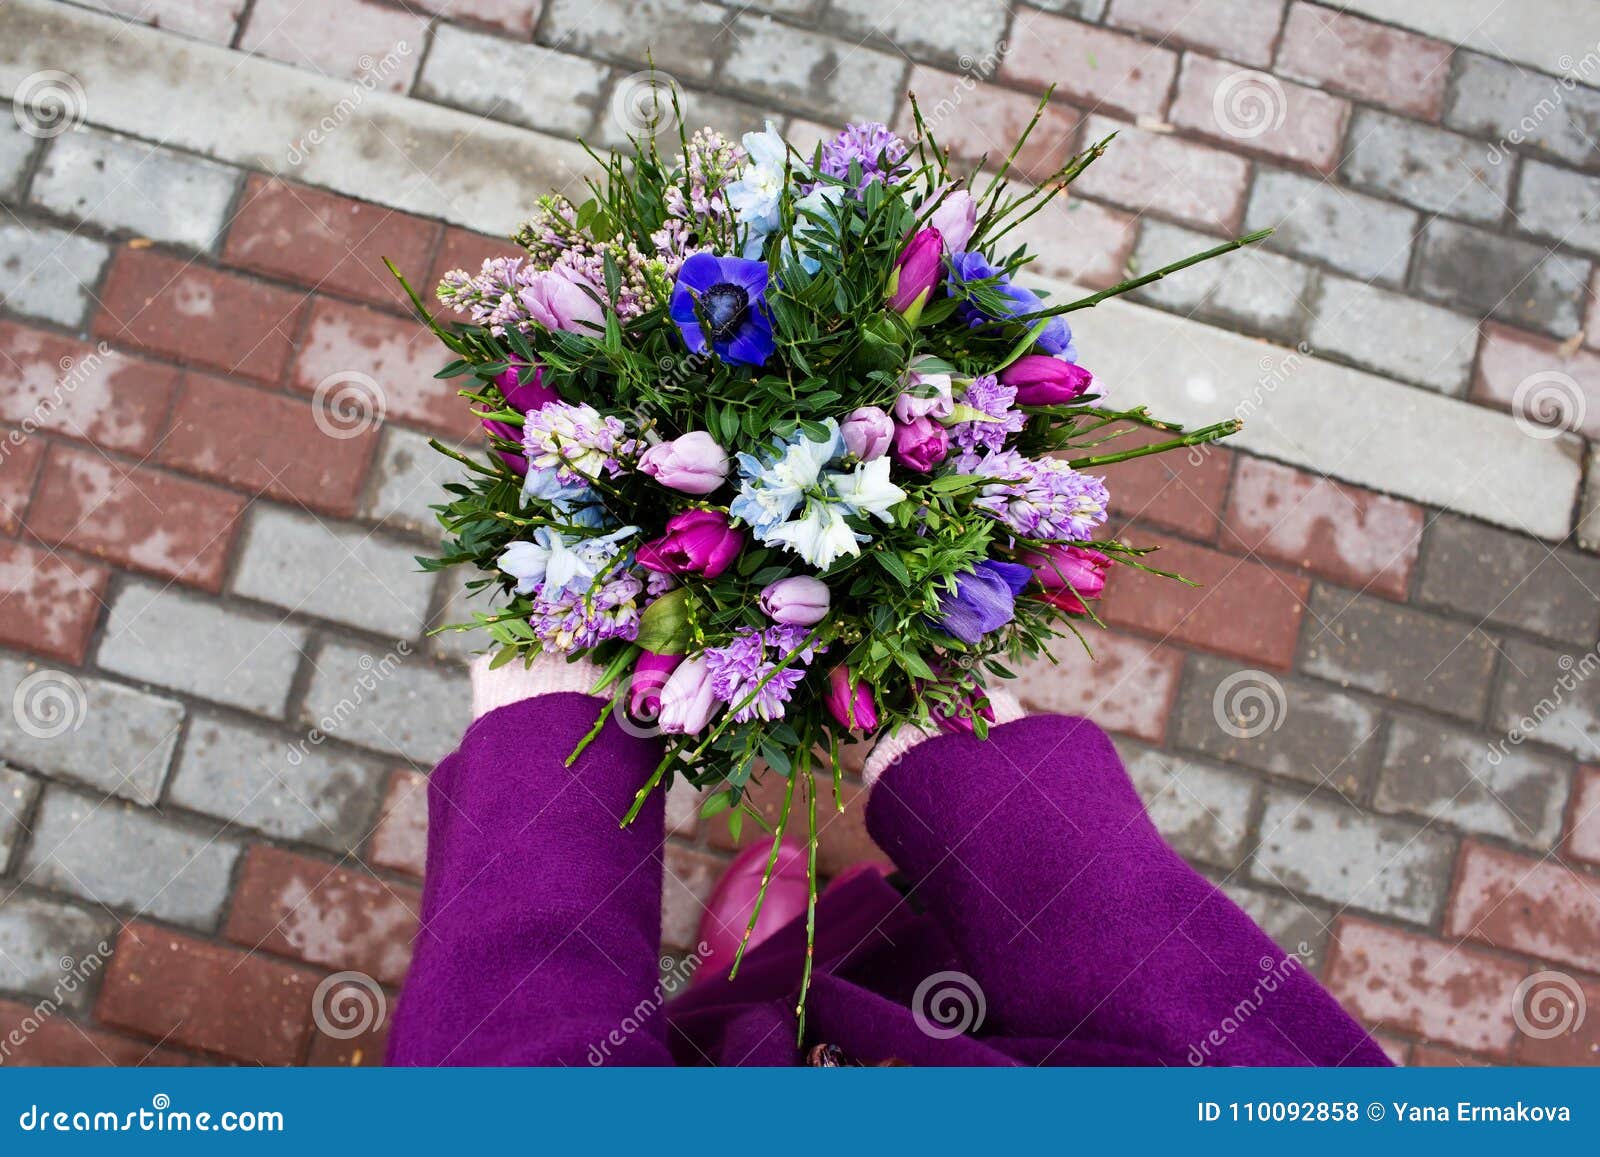 beautiful bouquet in female hands